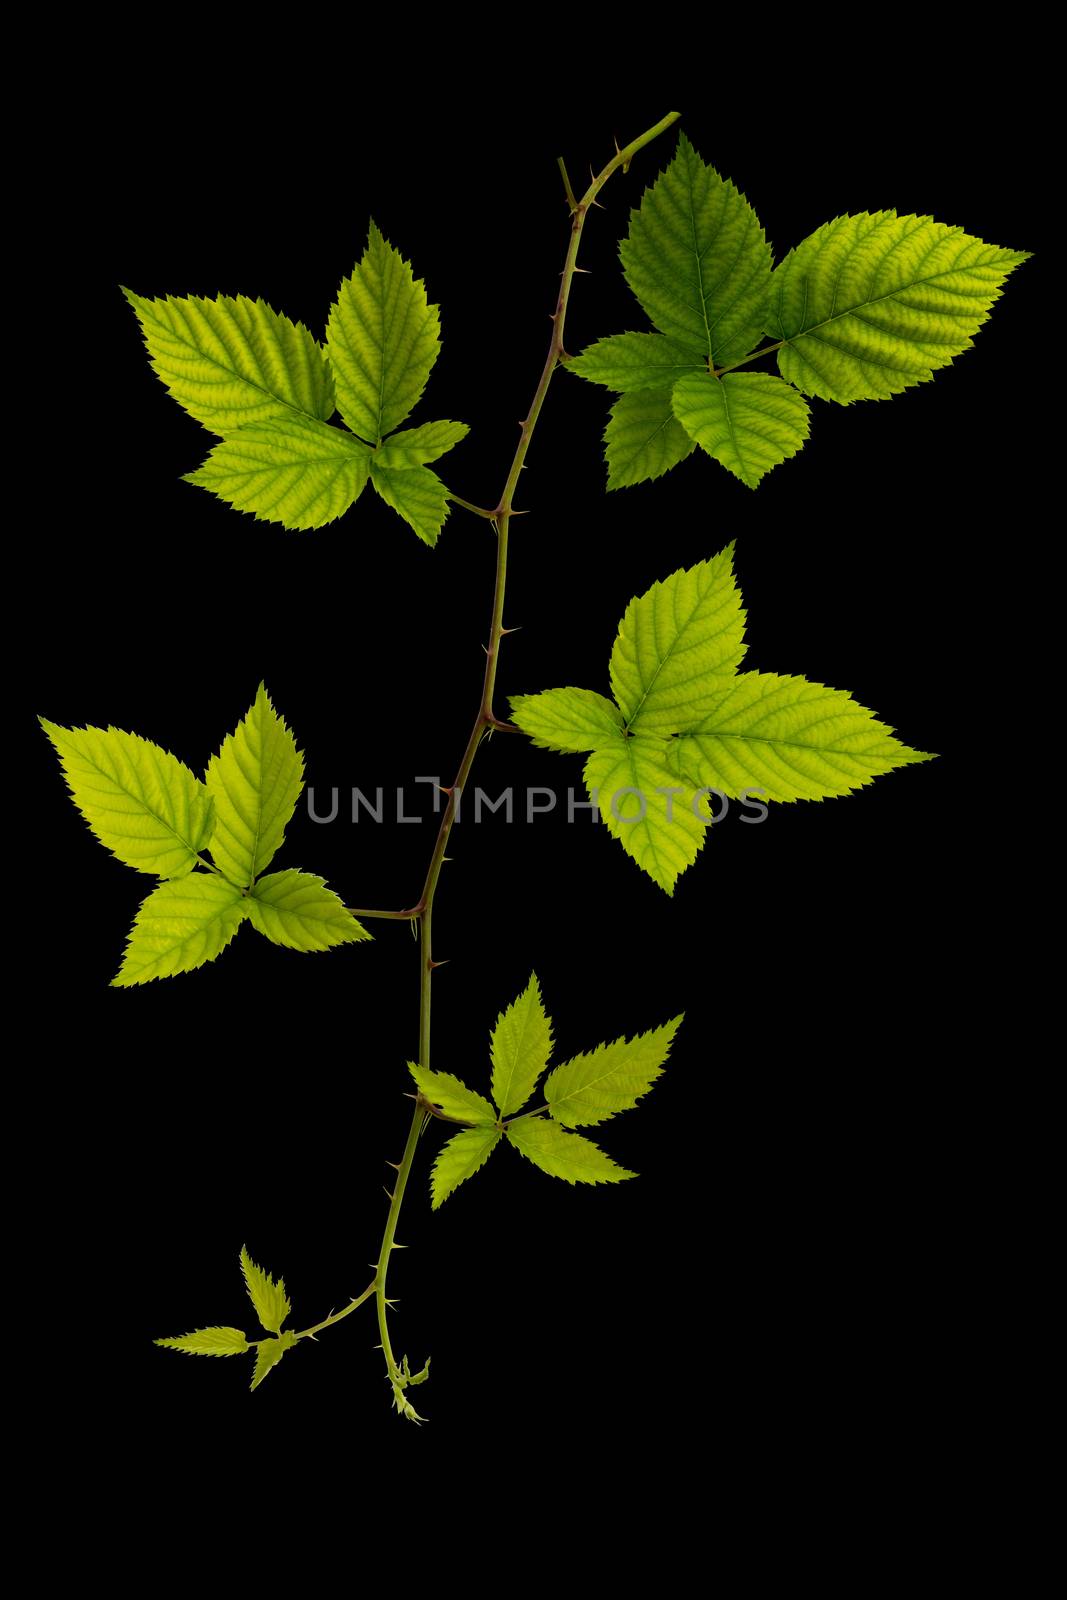 Blackberry fresh leaf isolated on black blackground by rakoptonLPN